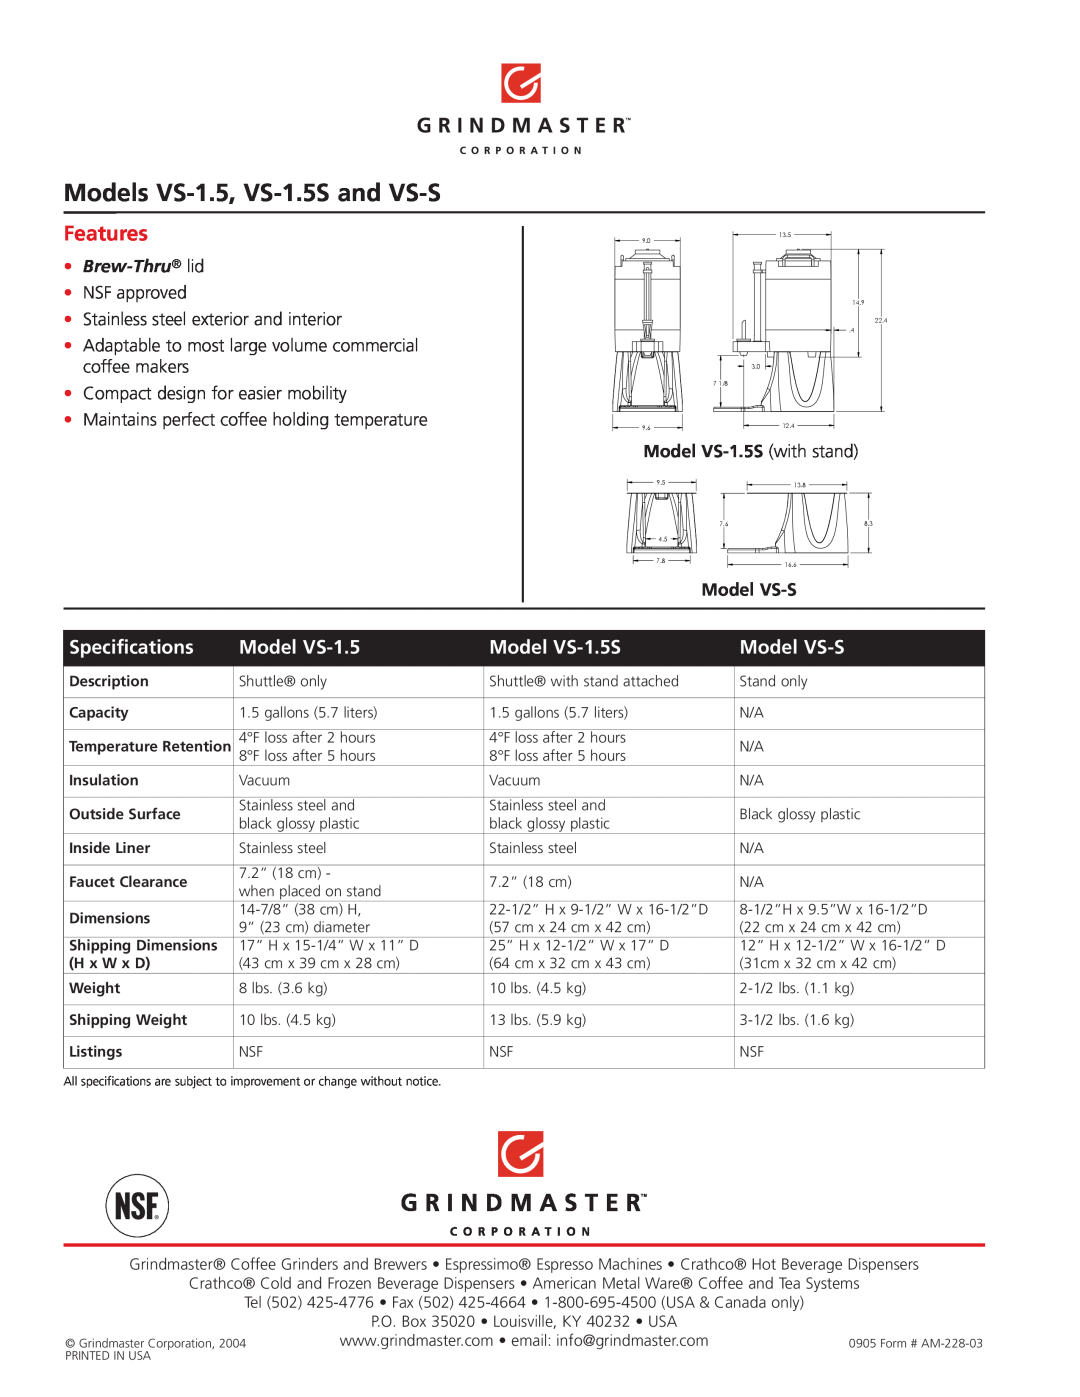 Grindmaster Models VS-1.5, VS-1.5Sand VS-S, Features, Specifications, Model VS-1.5S, Model VS-S, Brew-Thru lid 